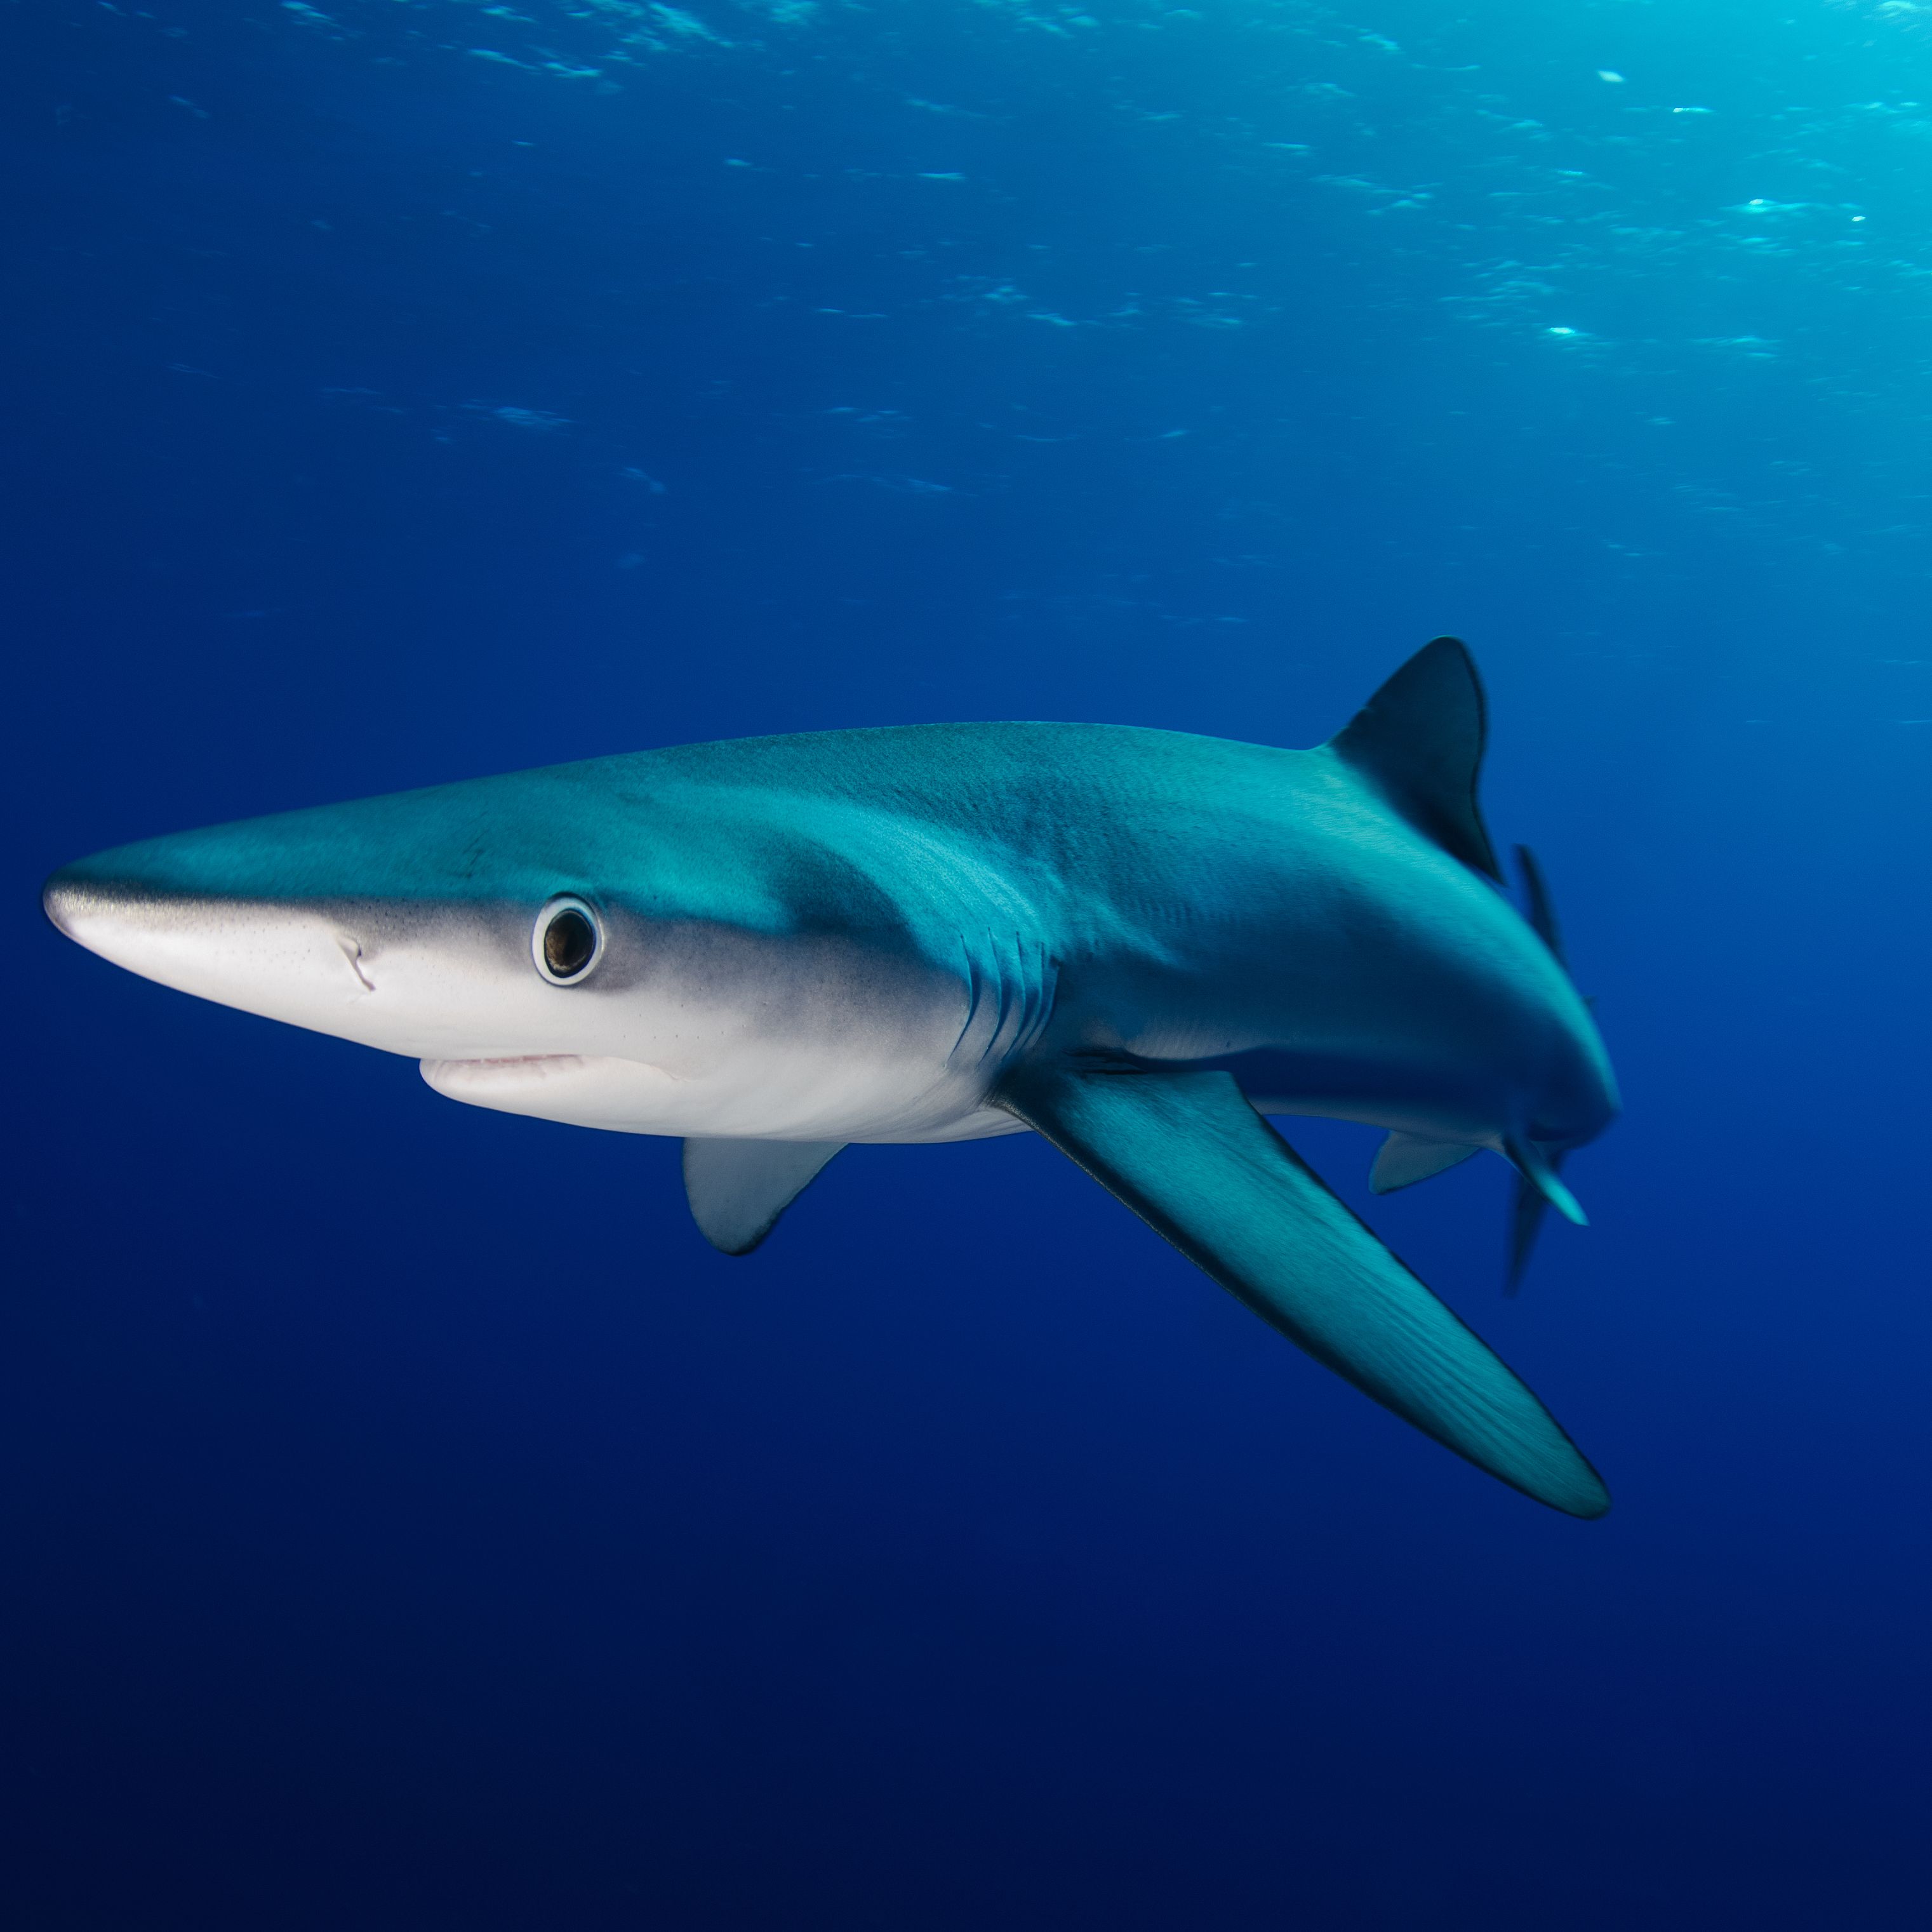 Detail Image Of A Shark Nomer 51